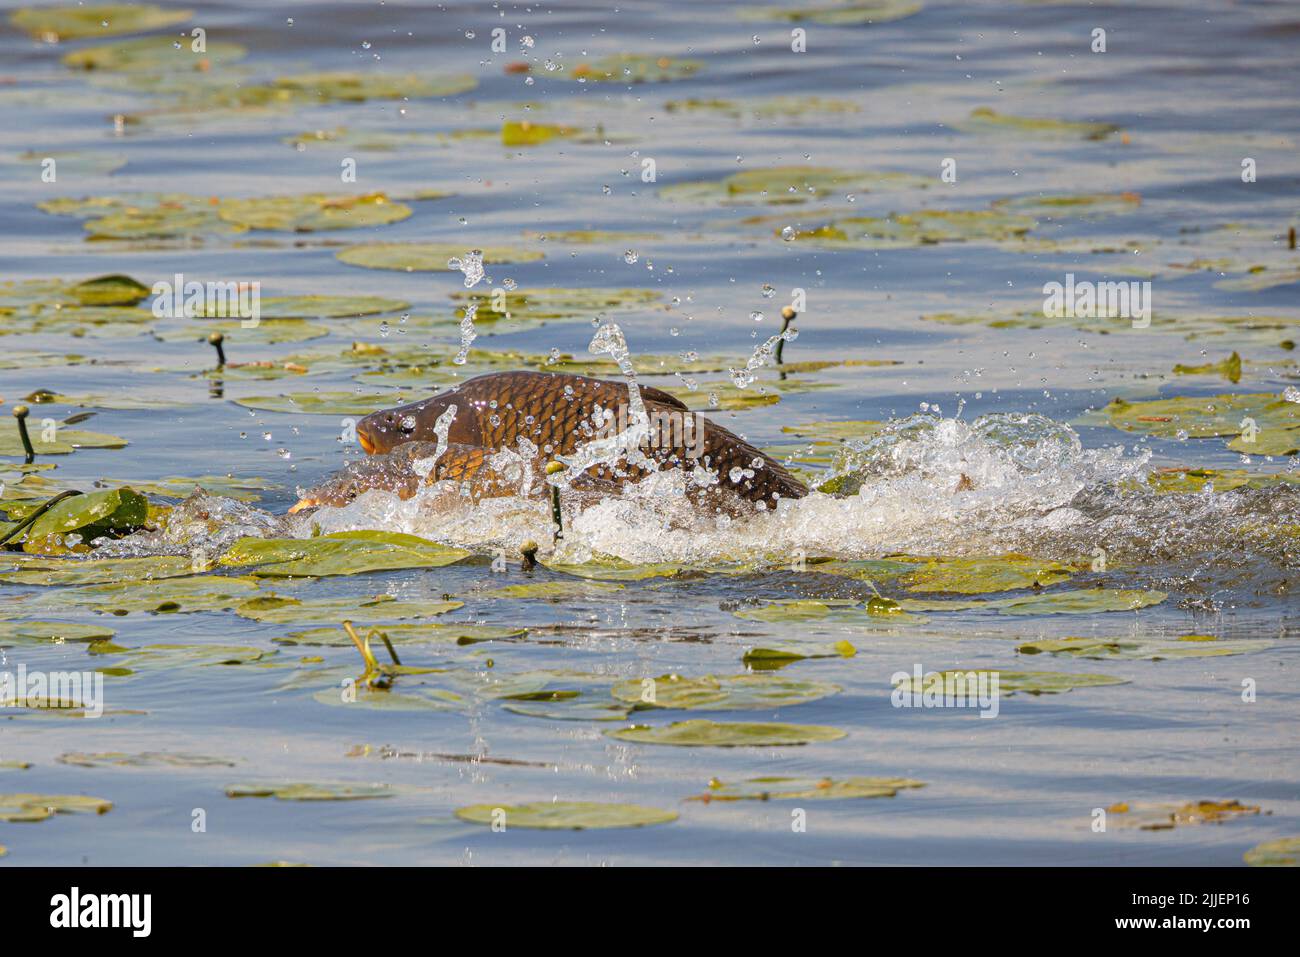 carp, common carp, European carp (Cyprinus carpio), spawning in a water lily pond, Germany, Bavaria Stock Photo